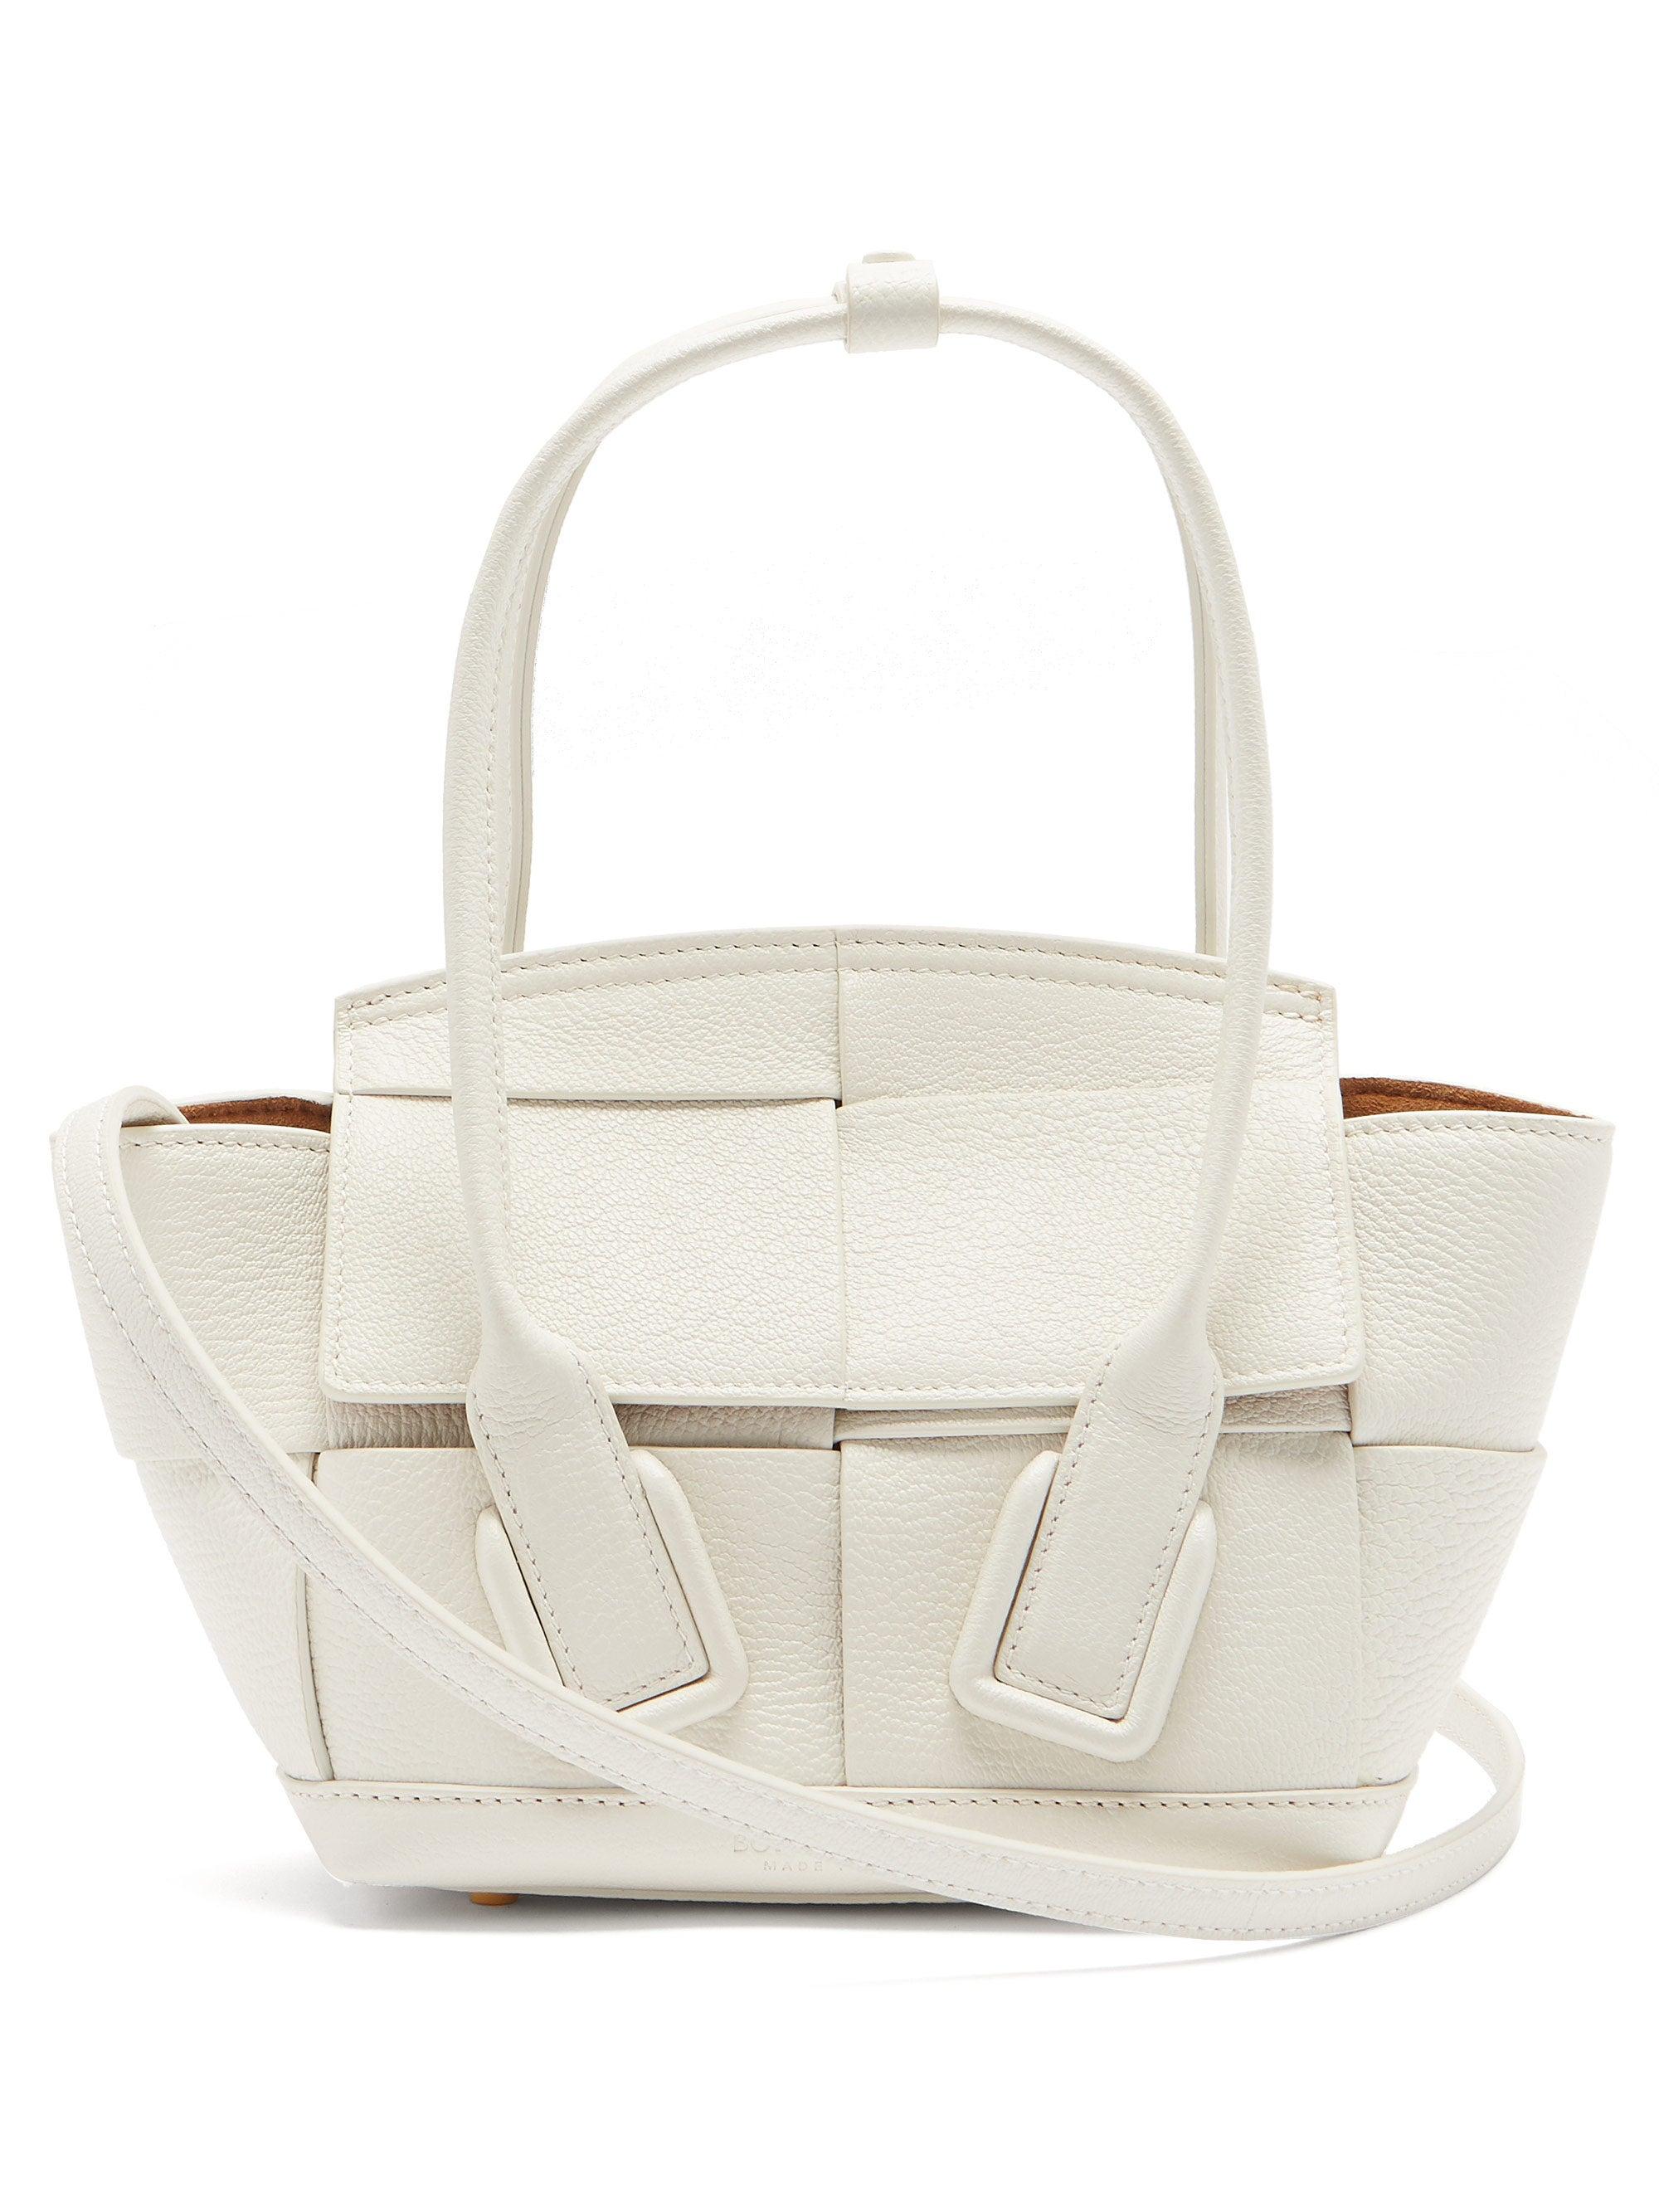 Bottega Veneta Leather Arco Maxi-intrecciato Mini Bag in White - Lyst